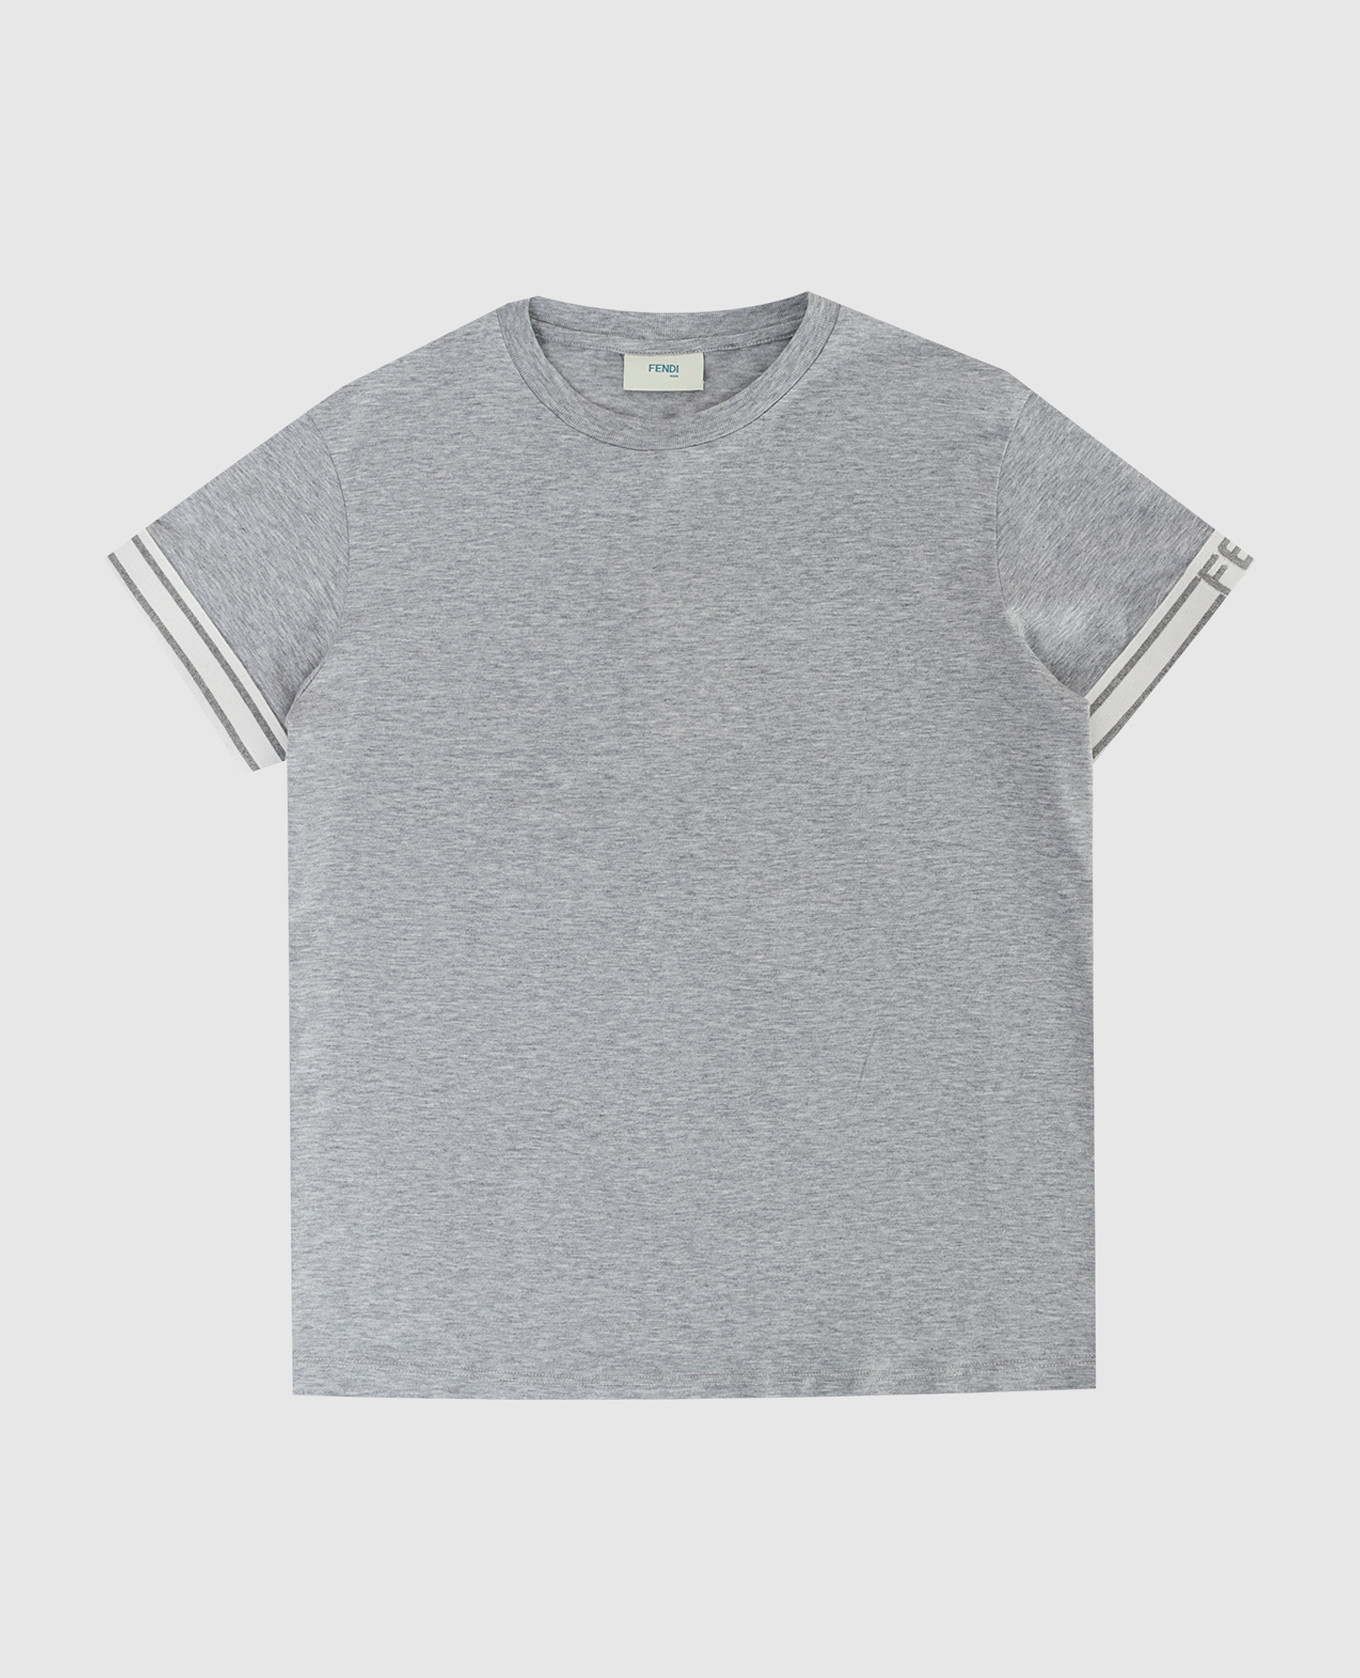 Children's gray t-shirt with logo